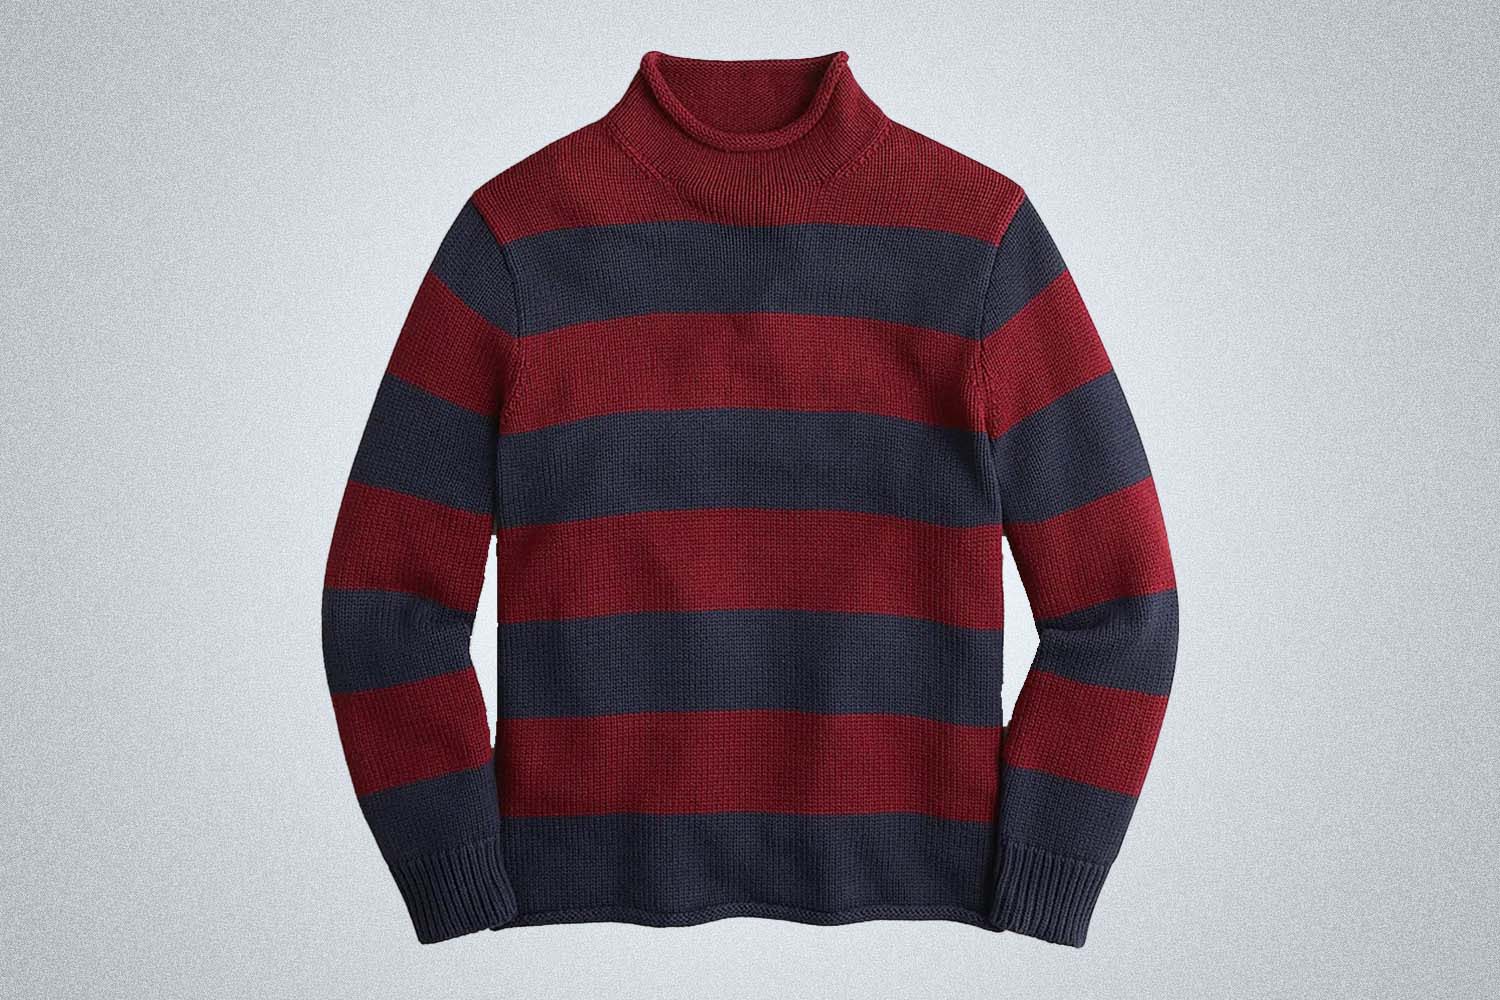 J.Crew Heritage Cotton Rollneck Letter Sweater